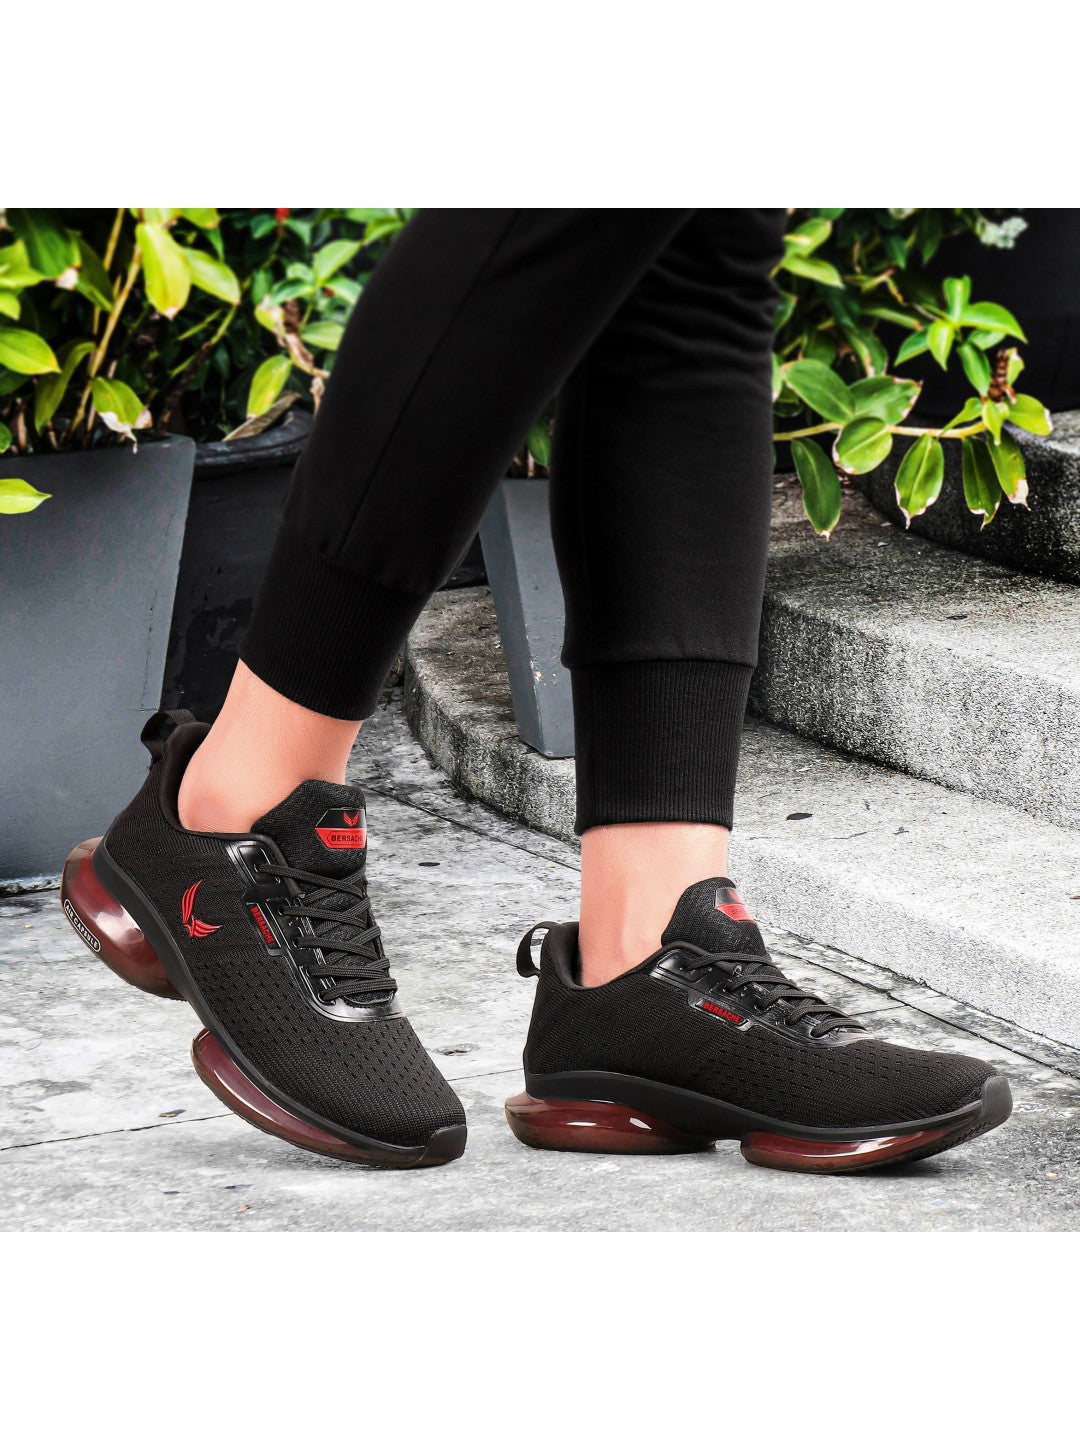 Bersache Lightweight Casual Sneaker Shoes For Men Black-9038